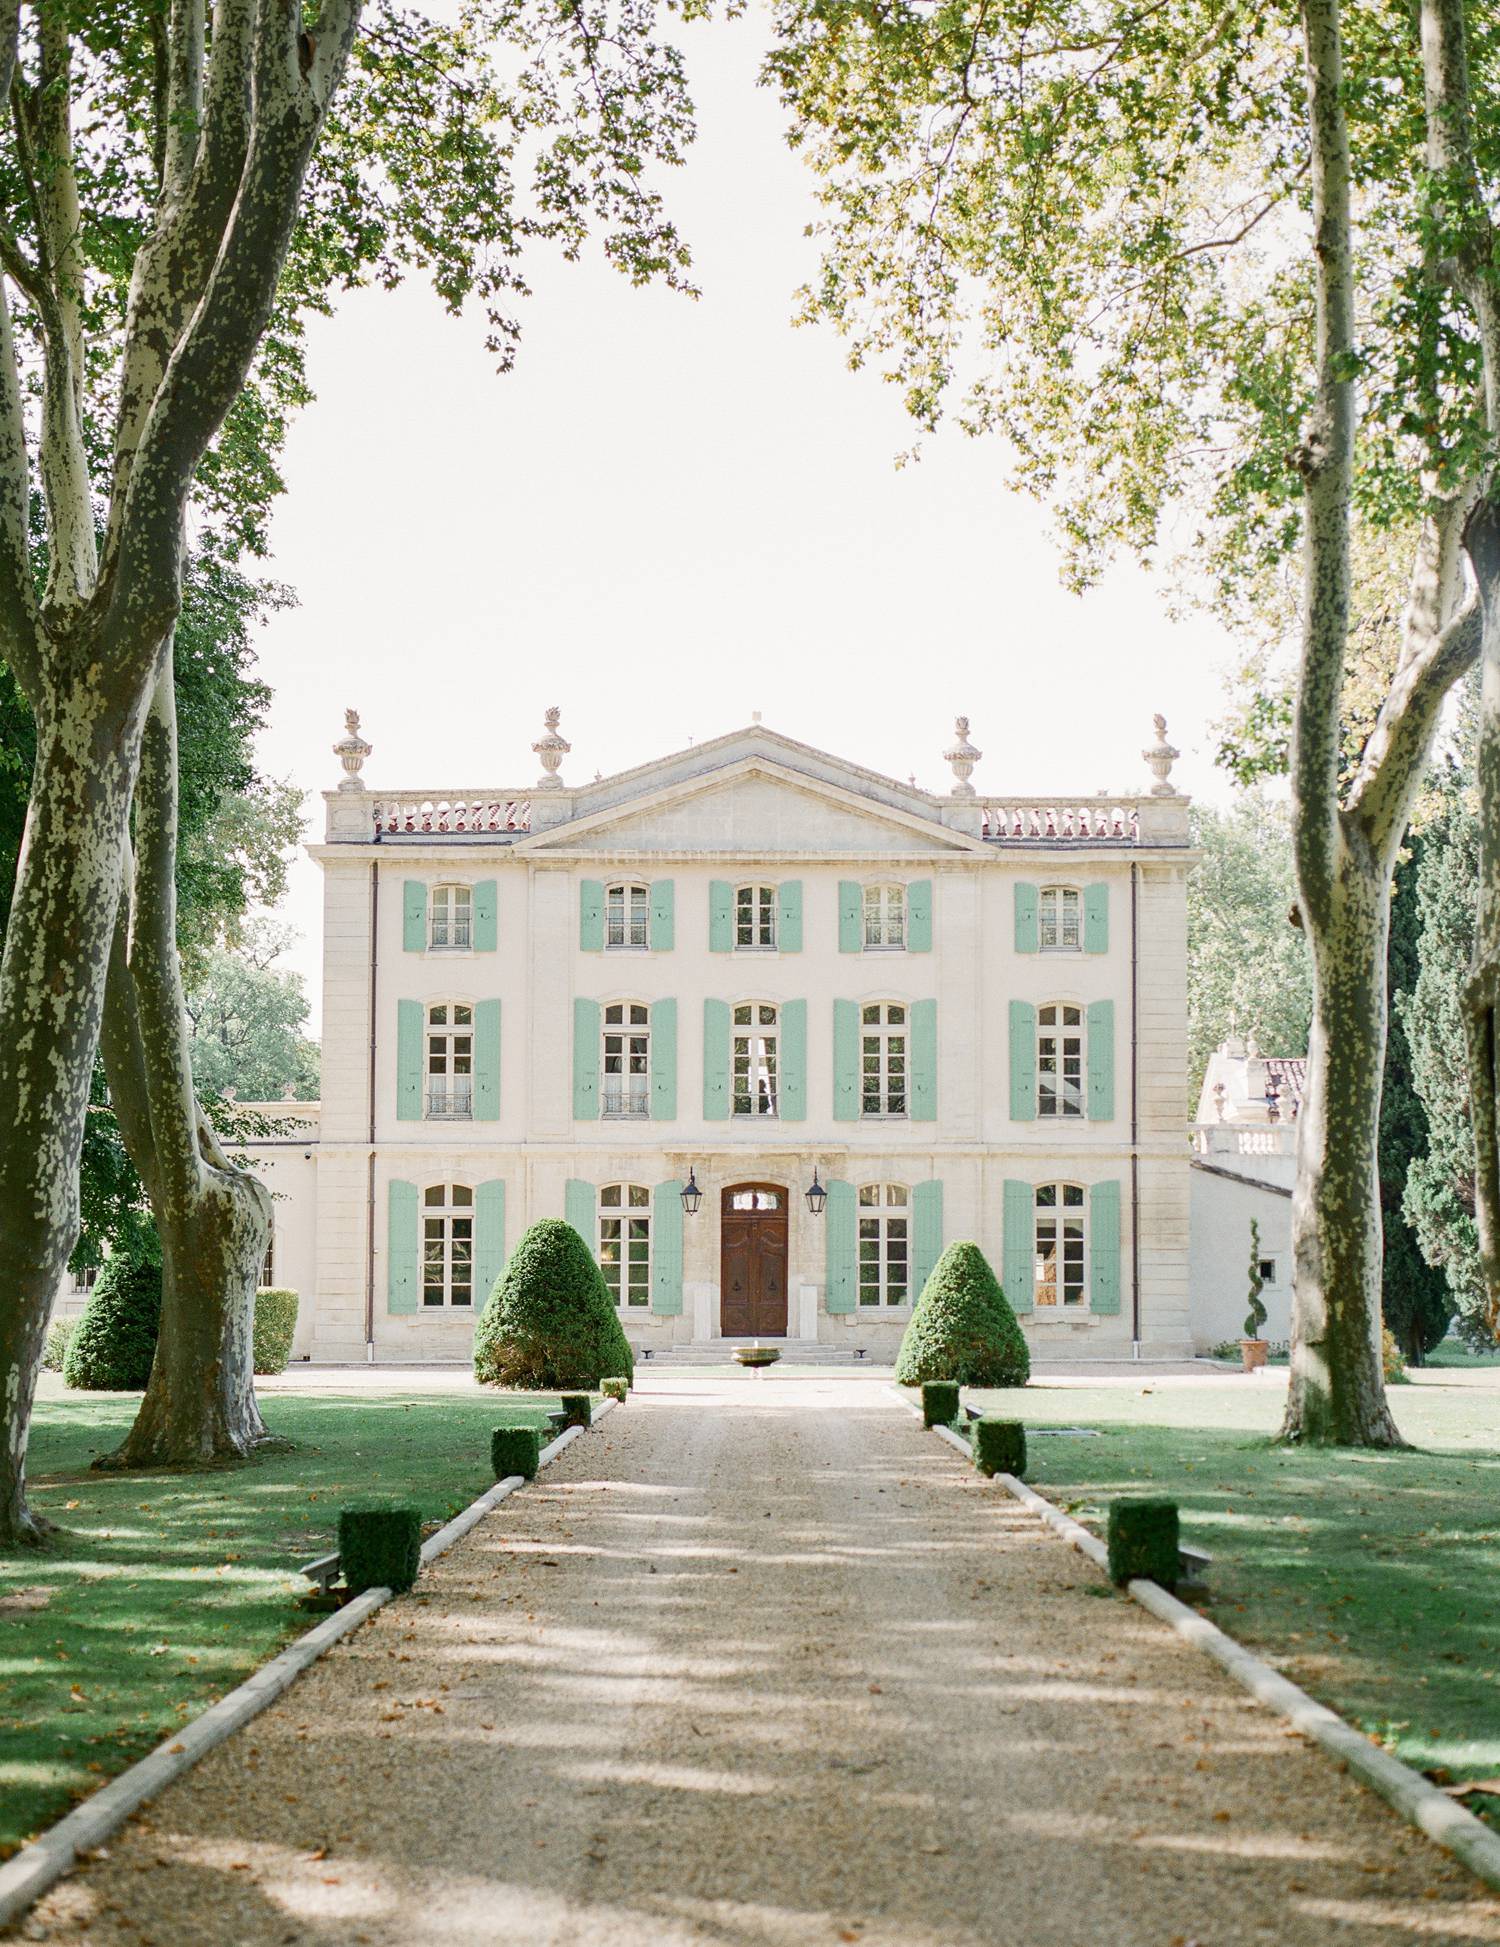 Chateau De Tourreau Wedding in Provence France